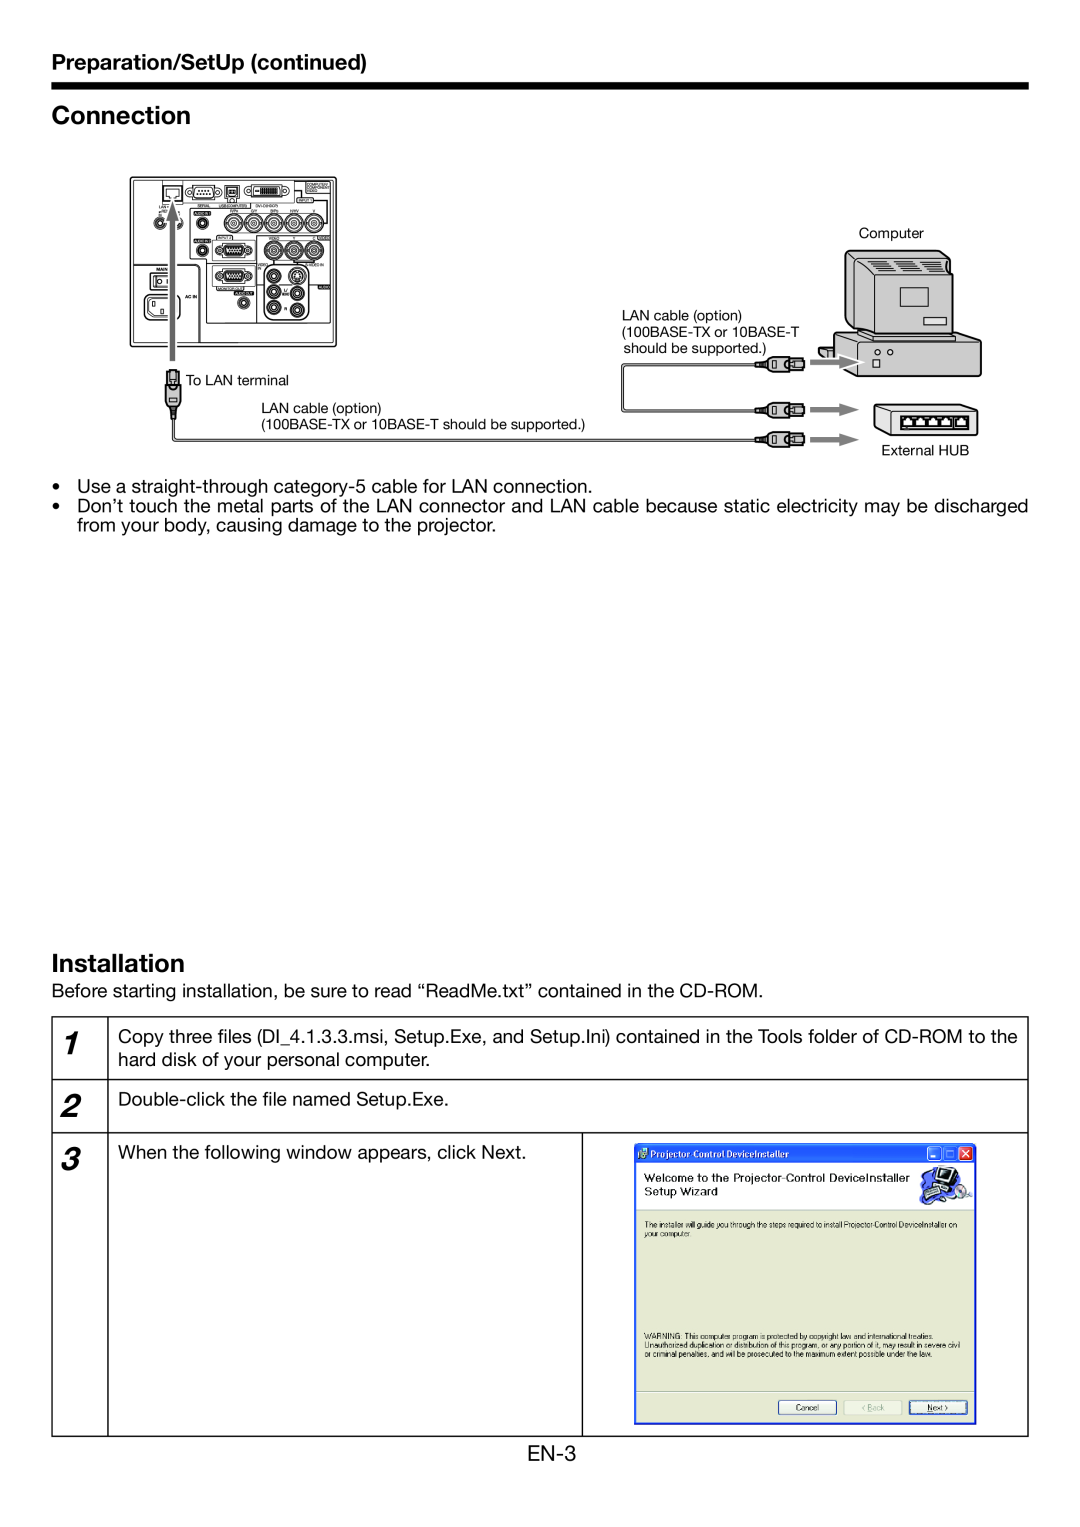 Mitsubishi Electronics FL7000U user manual Connection, Installation, Preparation/SetUp continued, EN-3 